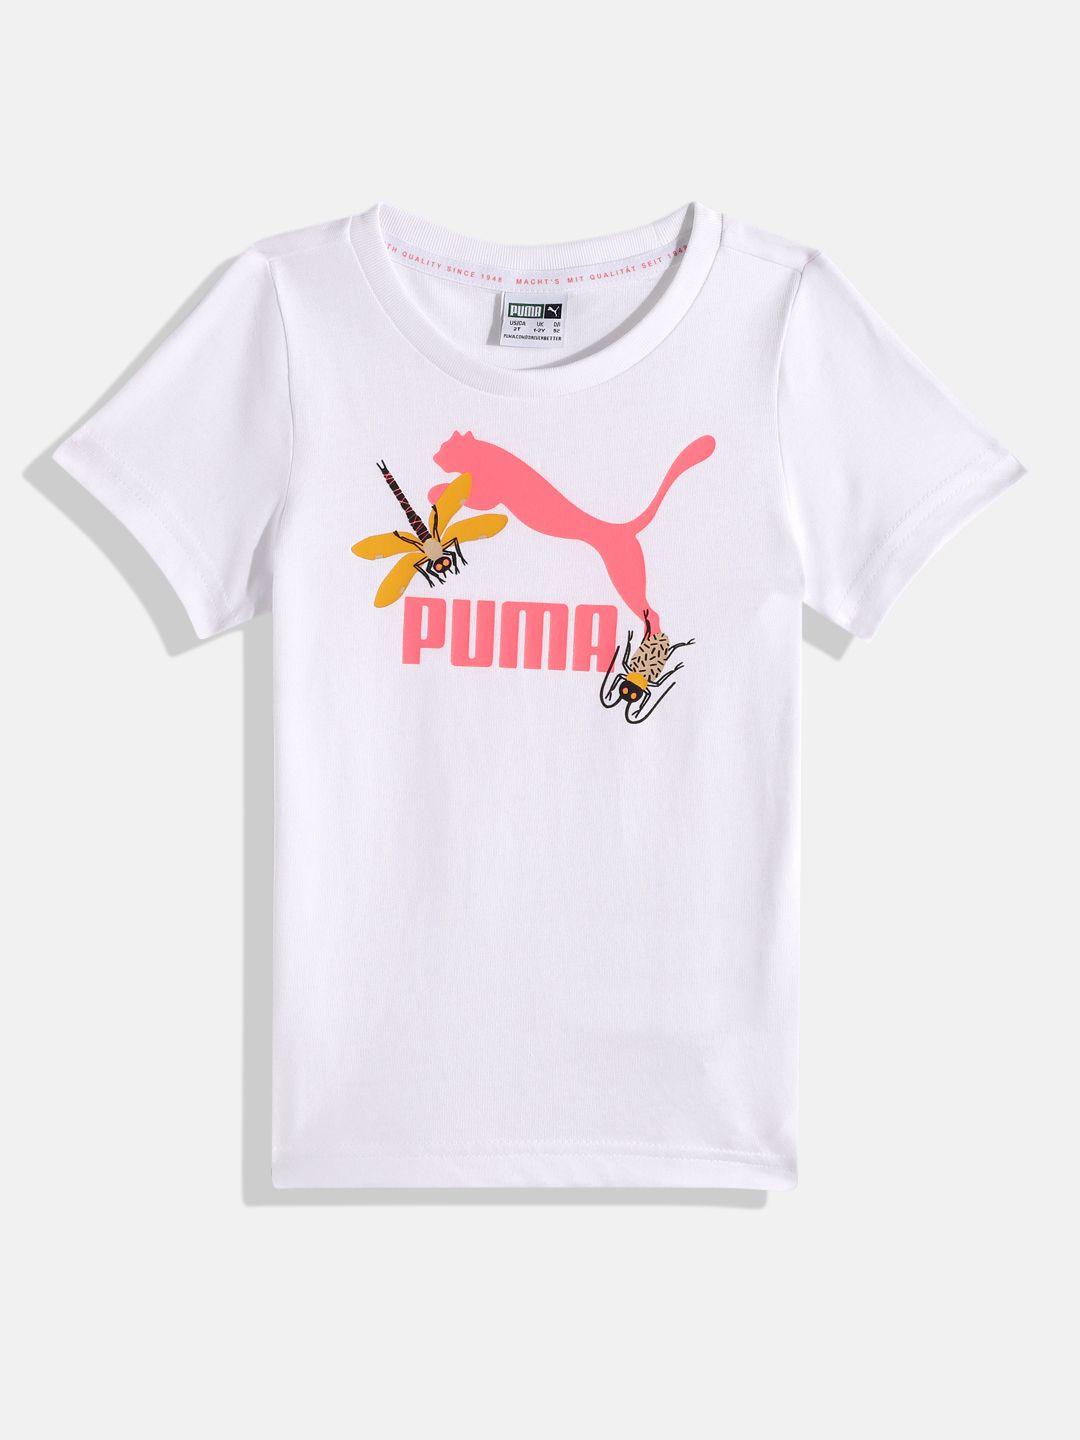 puma kids brand logo printed small world pure cotton t-shirt